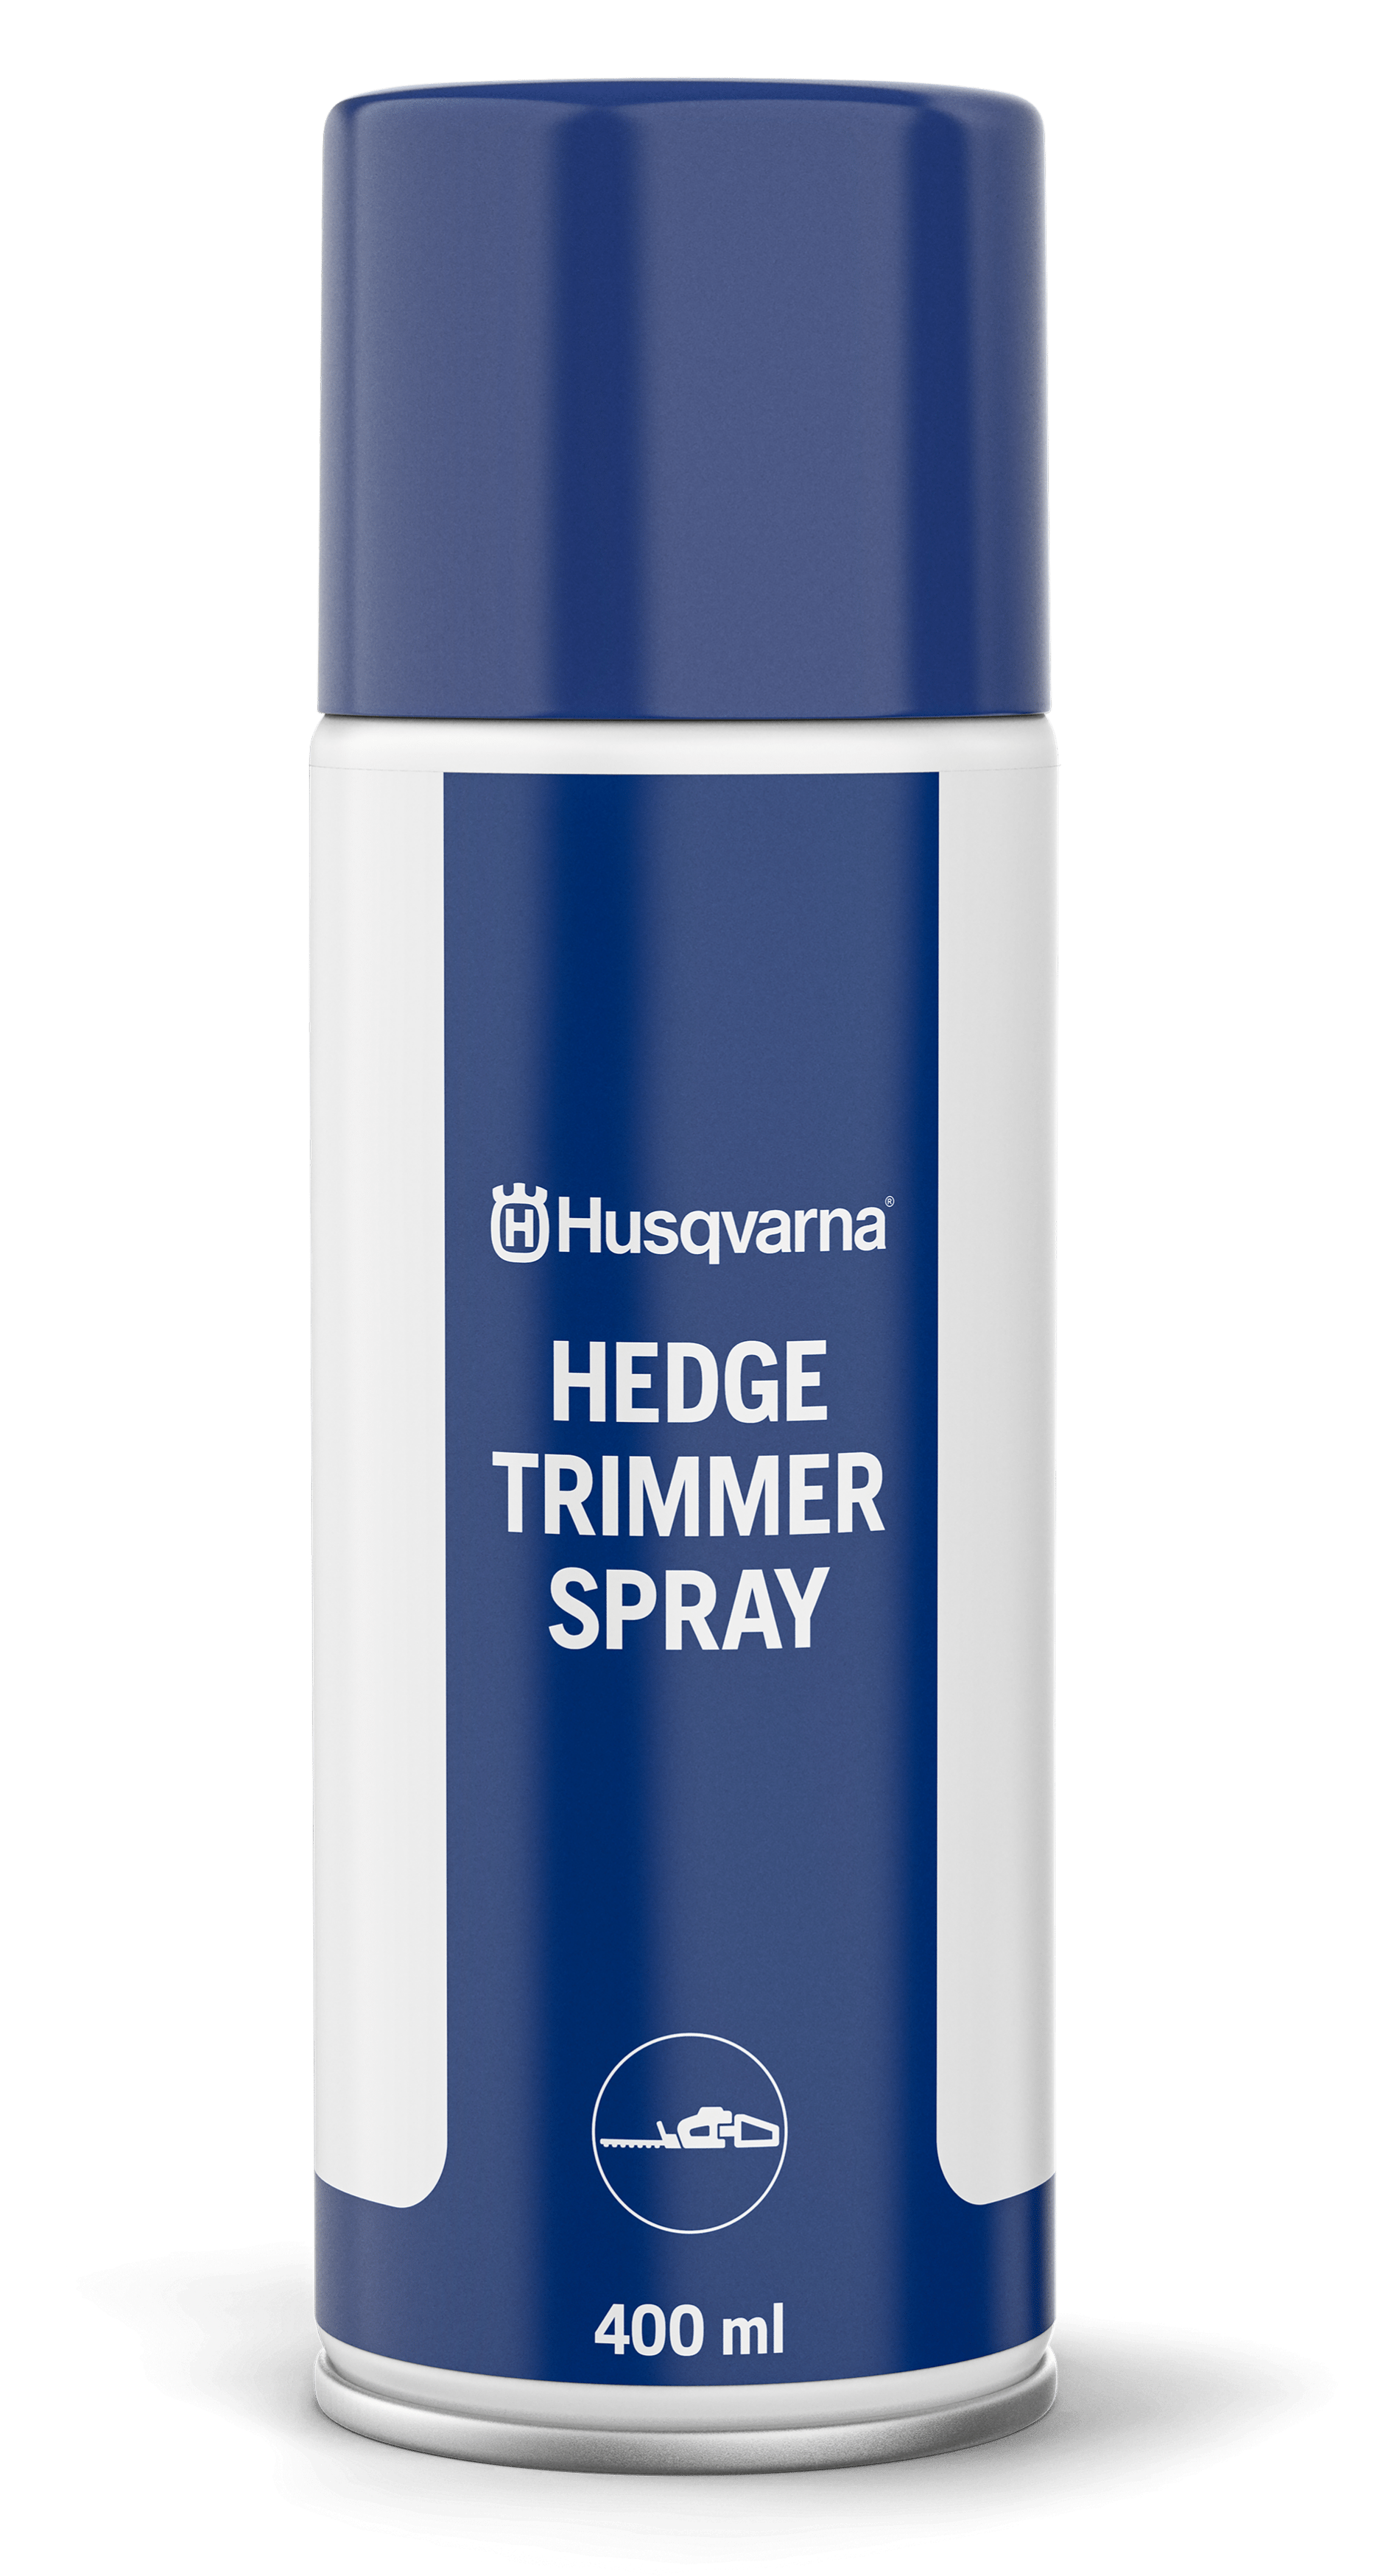 Hedge trimmer spray